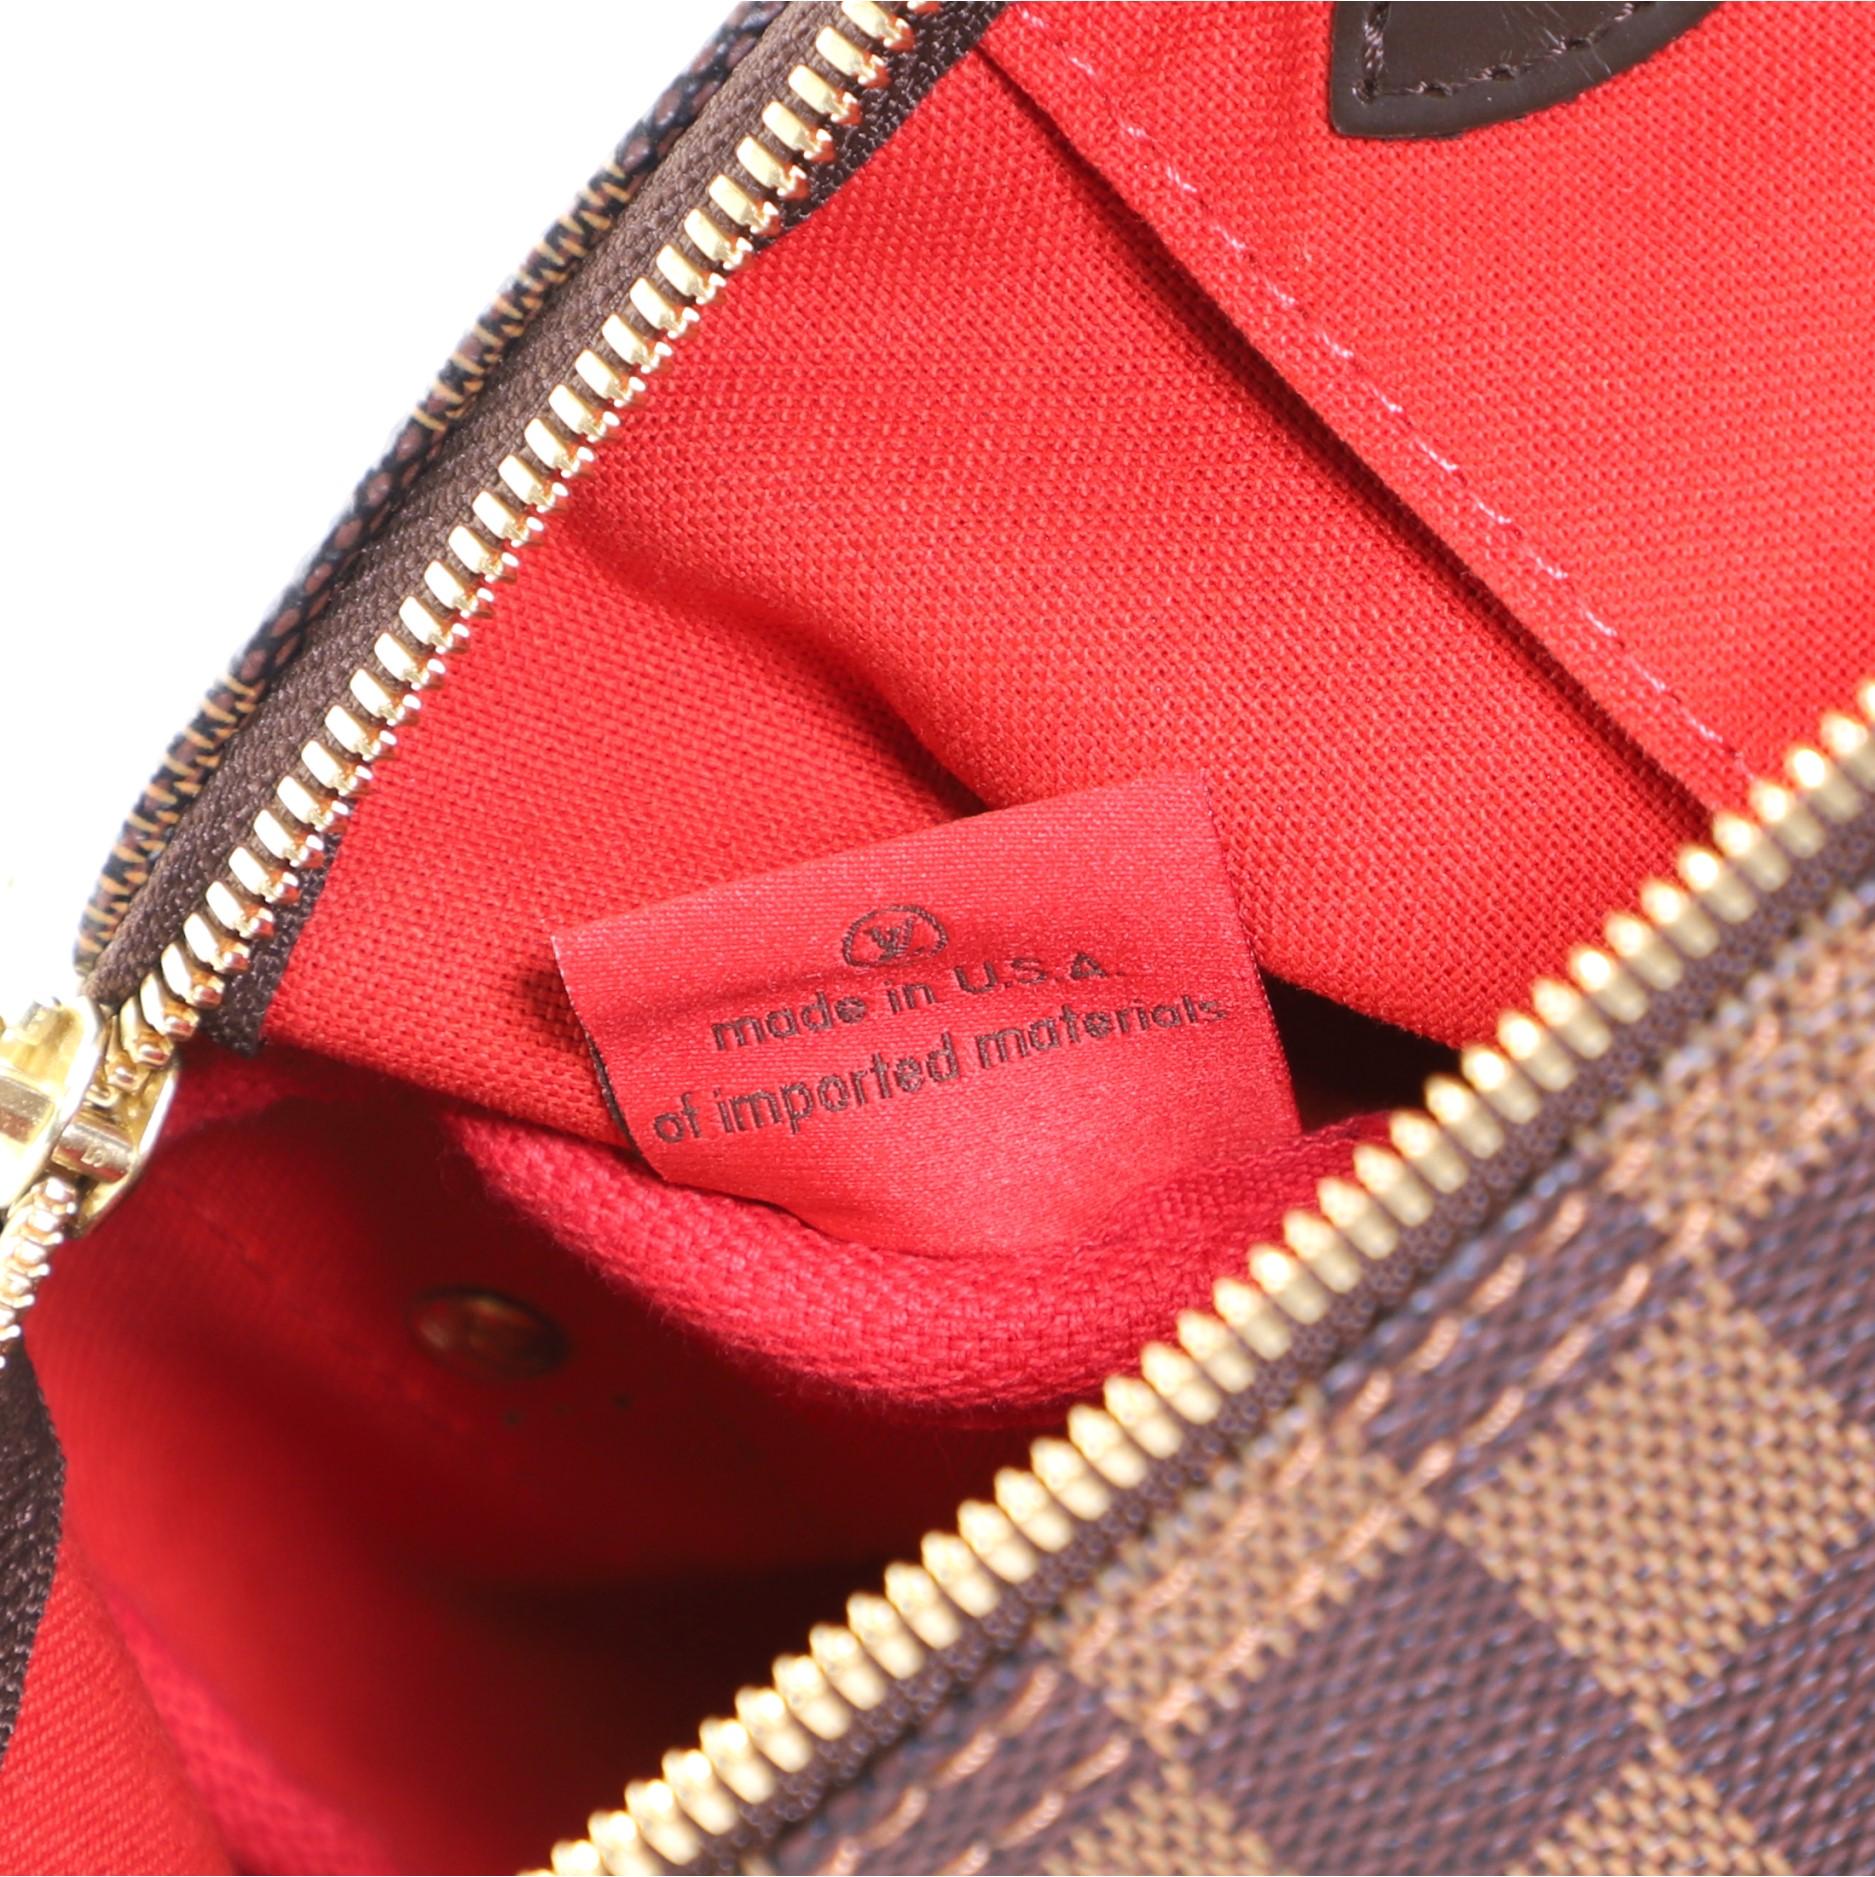 Black Louis Vuitton Speedy Bandouliere Bag Damier 35